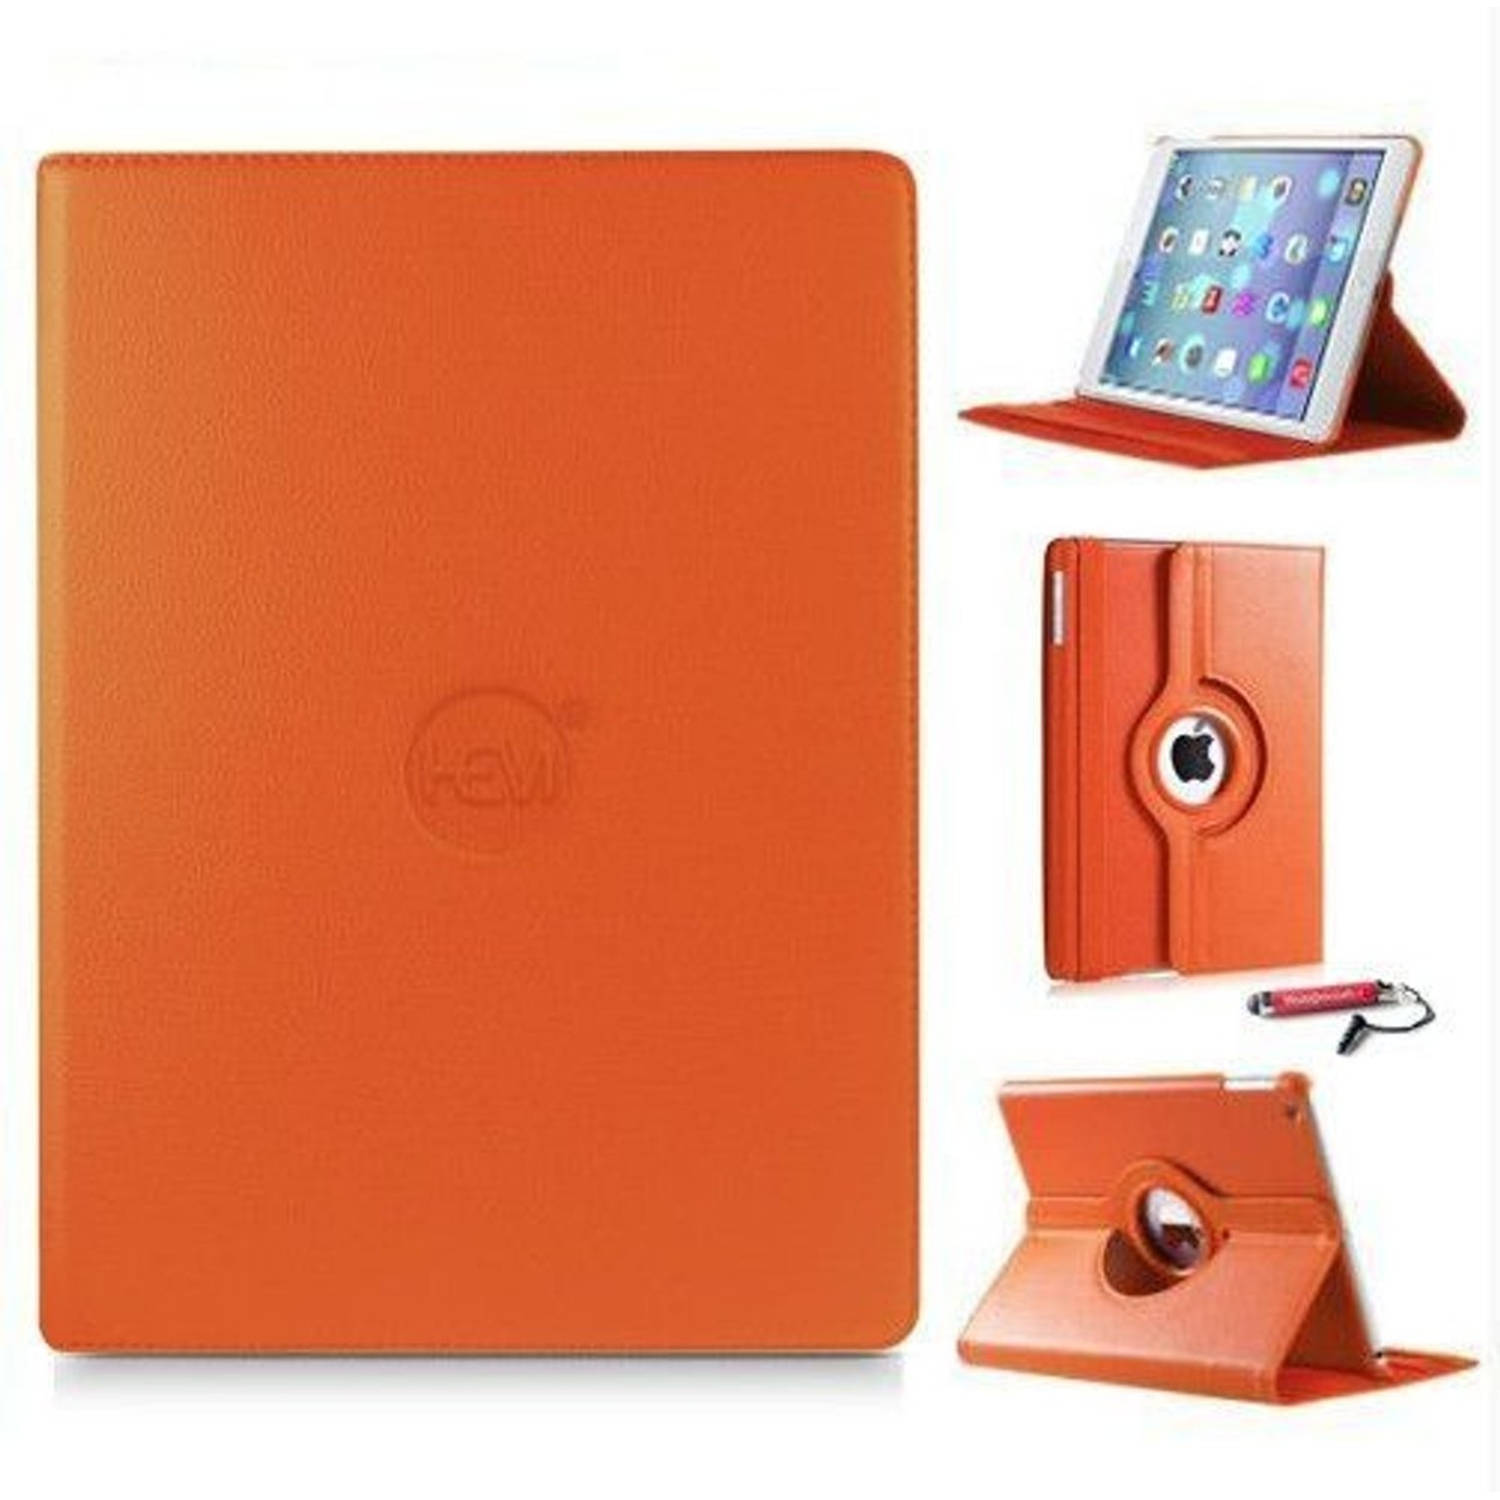 Oranje 360 Graden Draaibare Hoes Ipad Ipad Mini 1-2-3 Met Gekleurde Stylus Pen